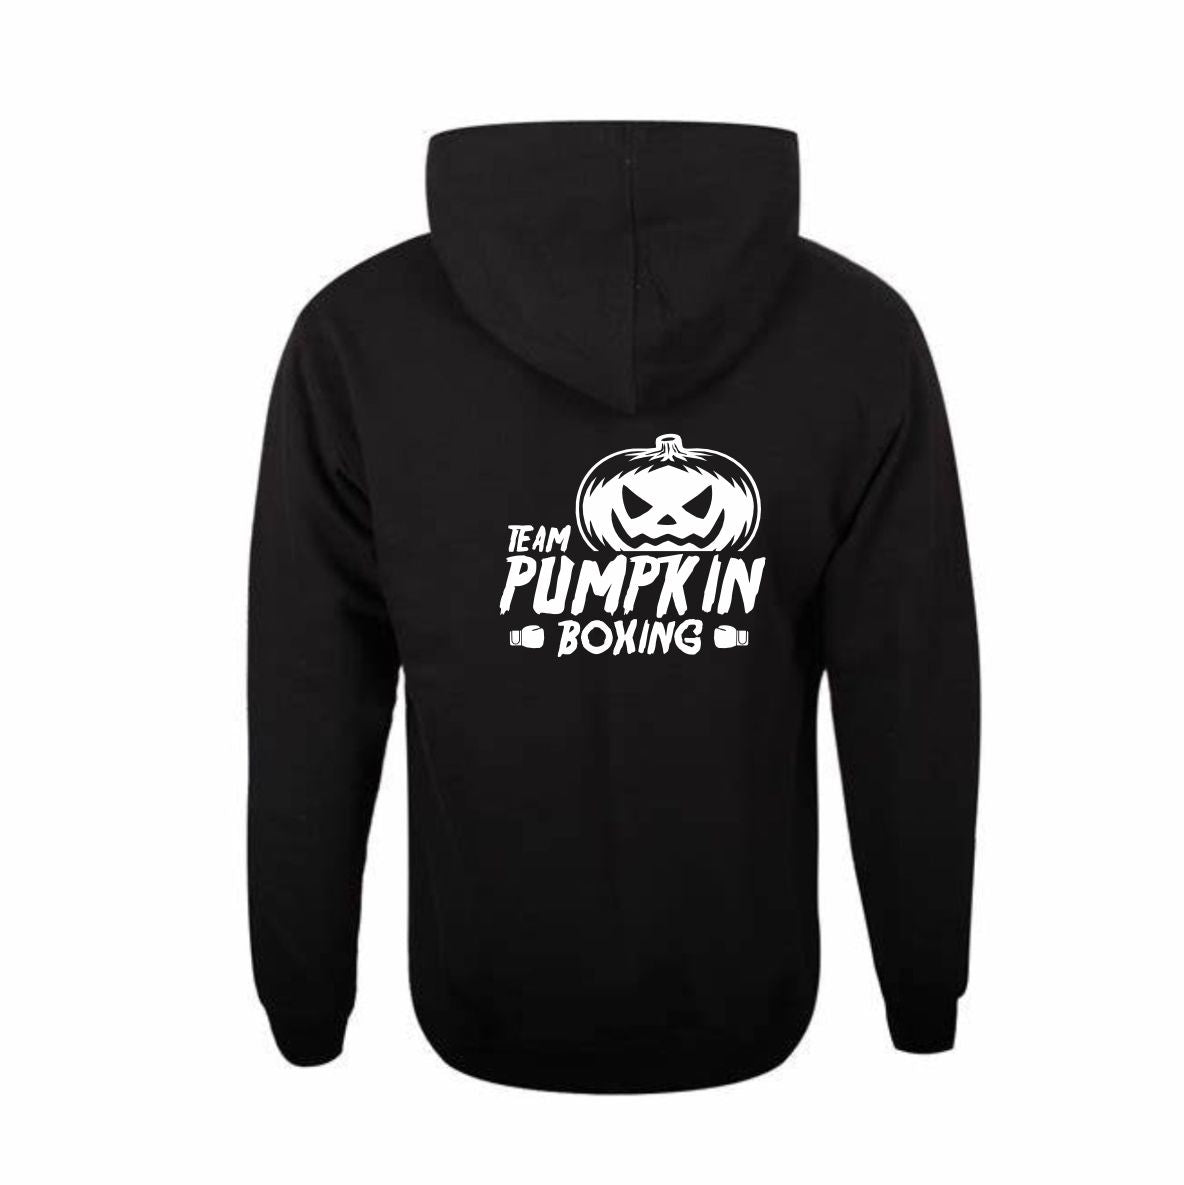 Team Pumpkin - Black Tracksuit top